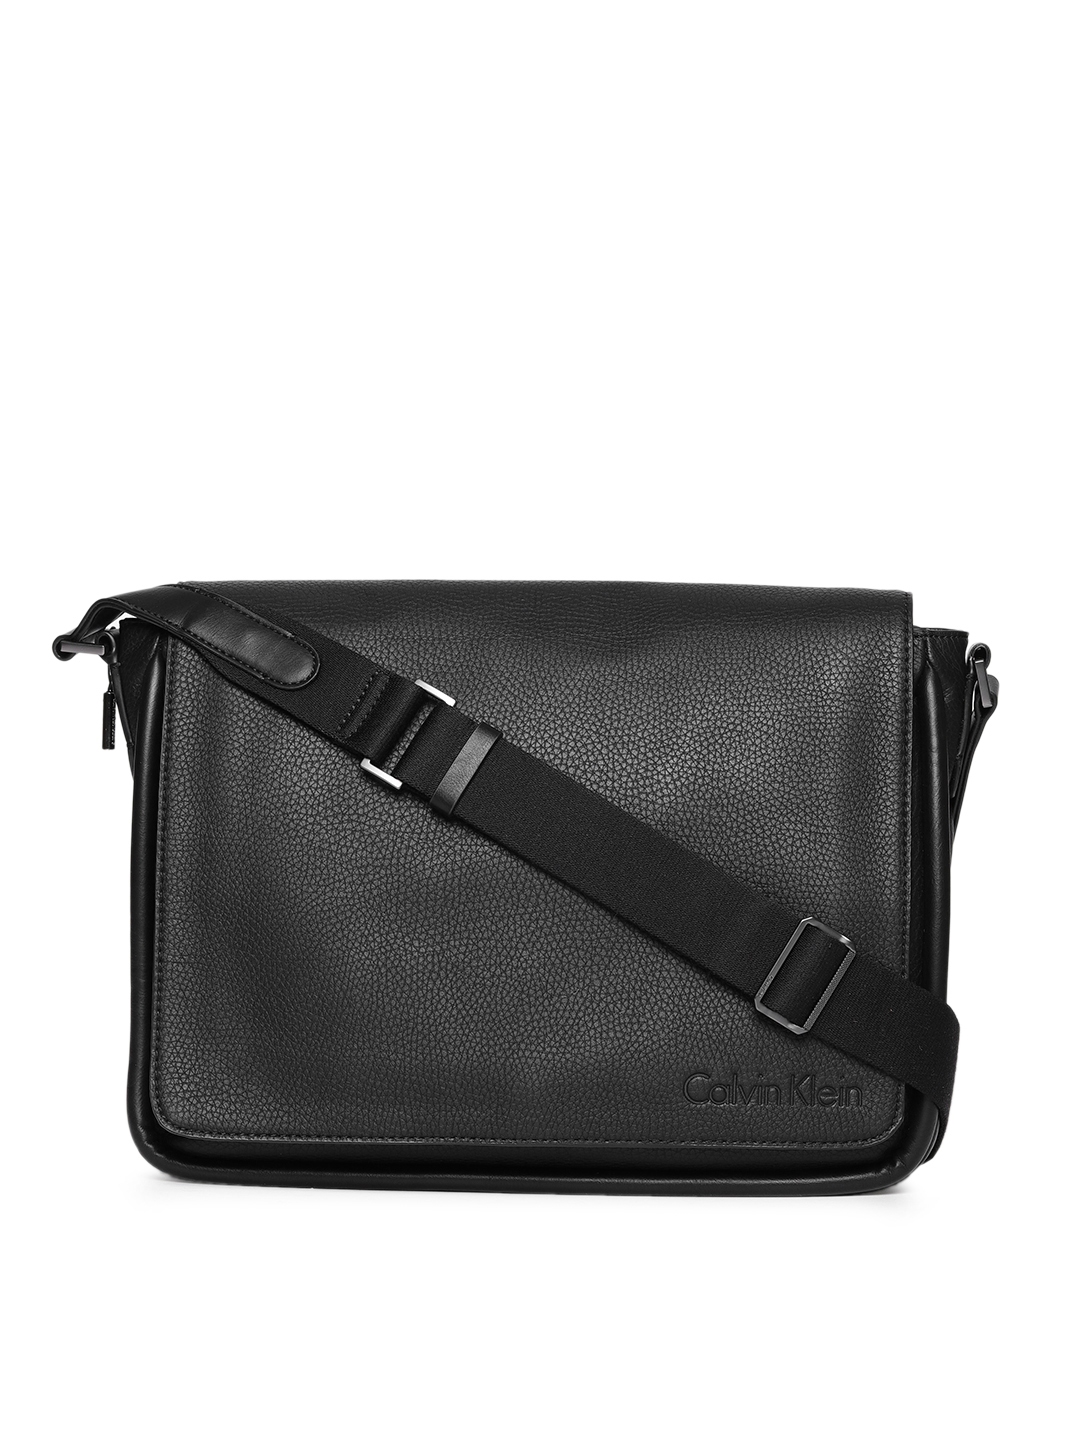 Calvin Klein Black Jeans Shoulder Bag | Watches Prime